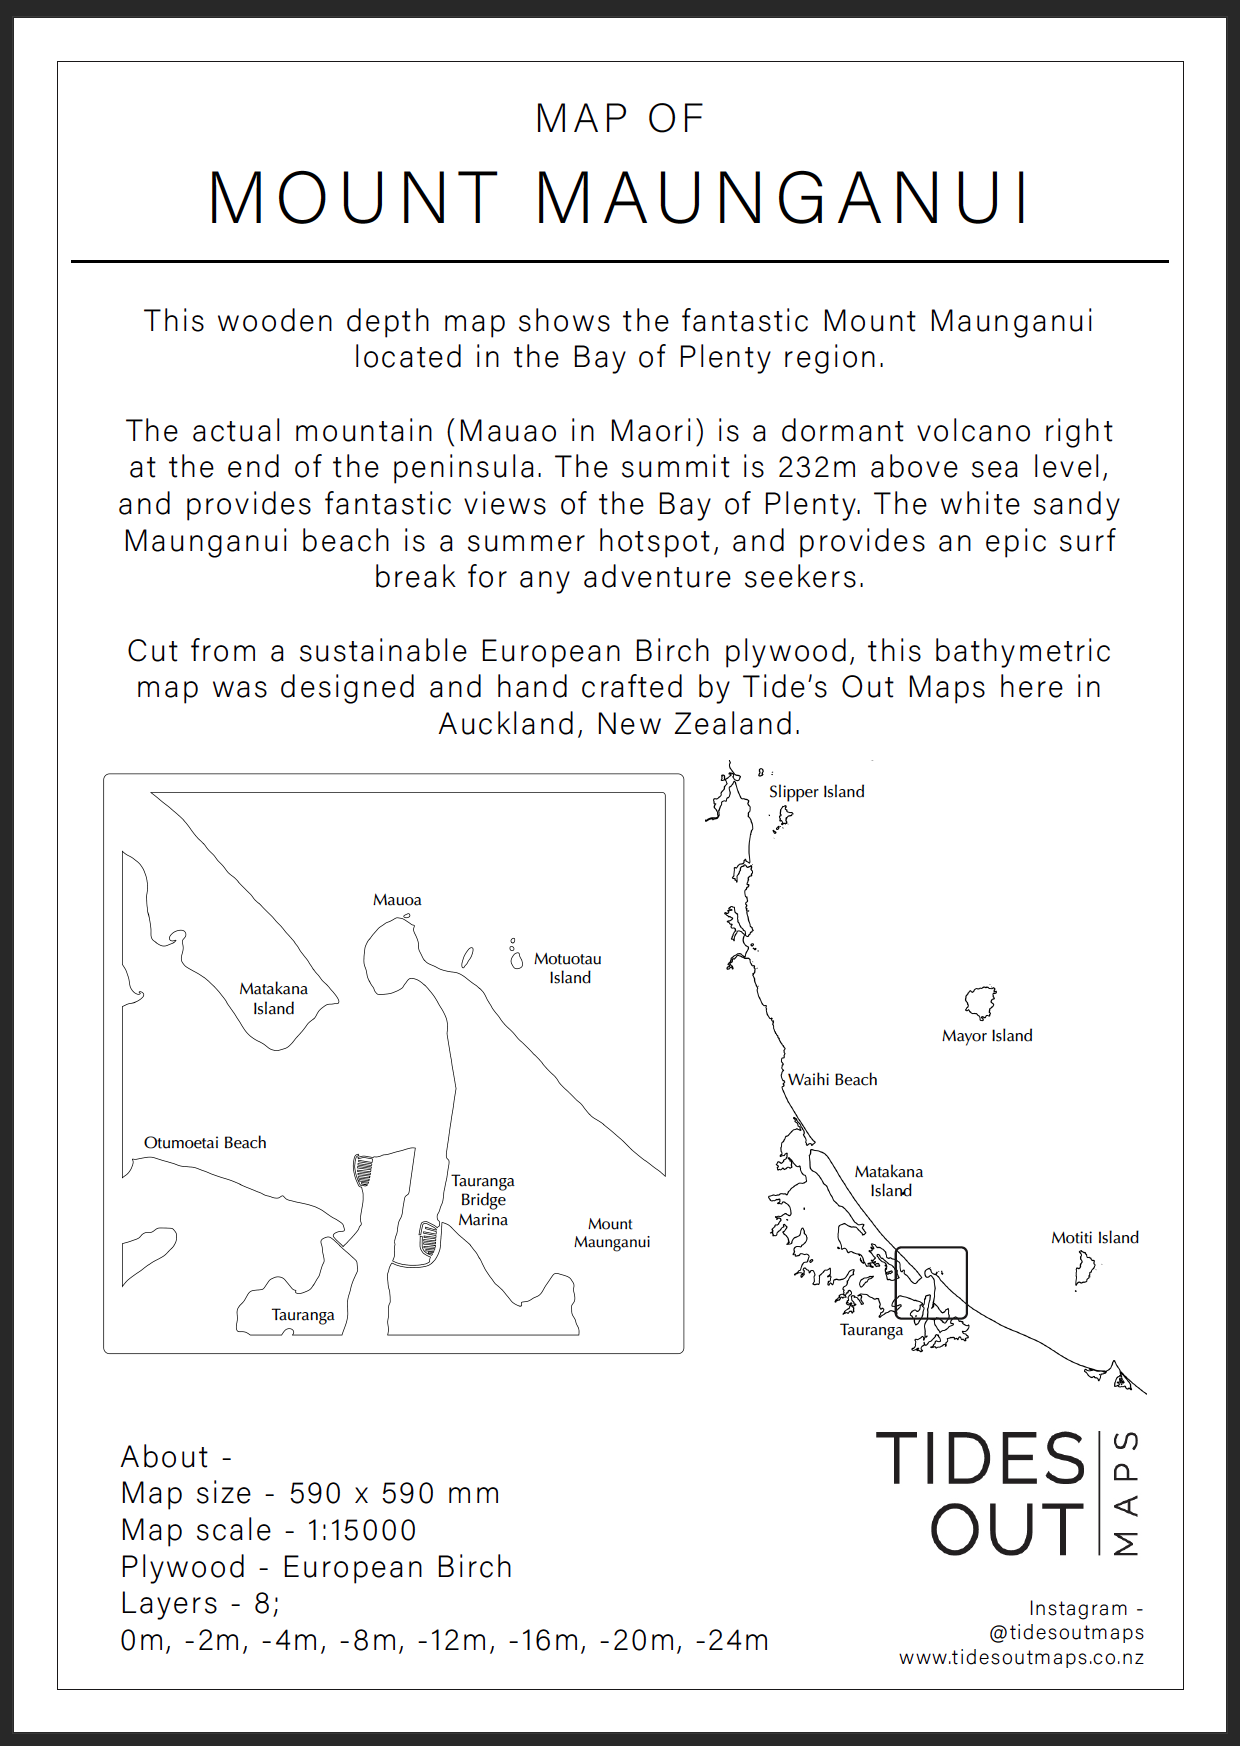 Mount Maunganui - Tide's Out Maps